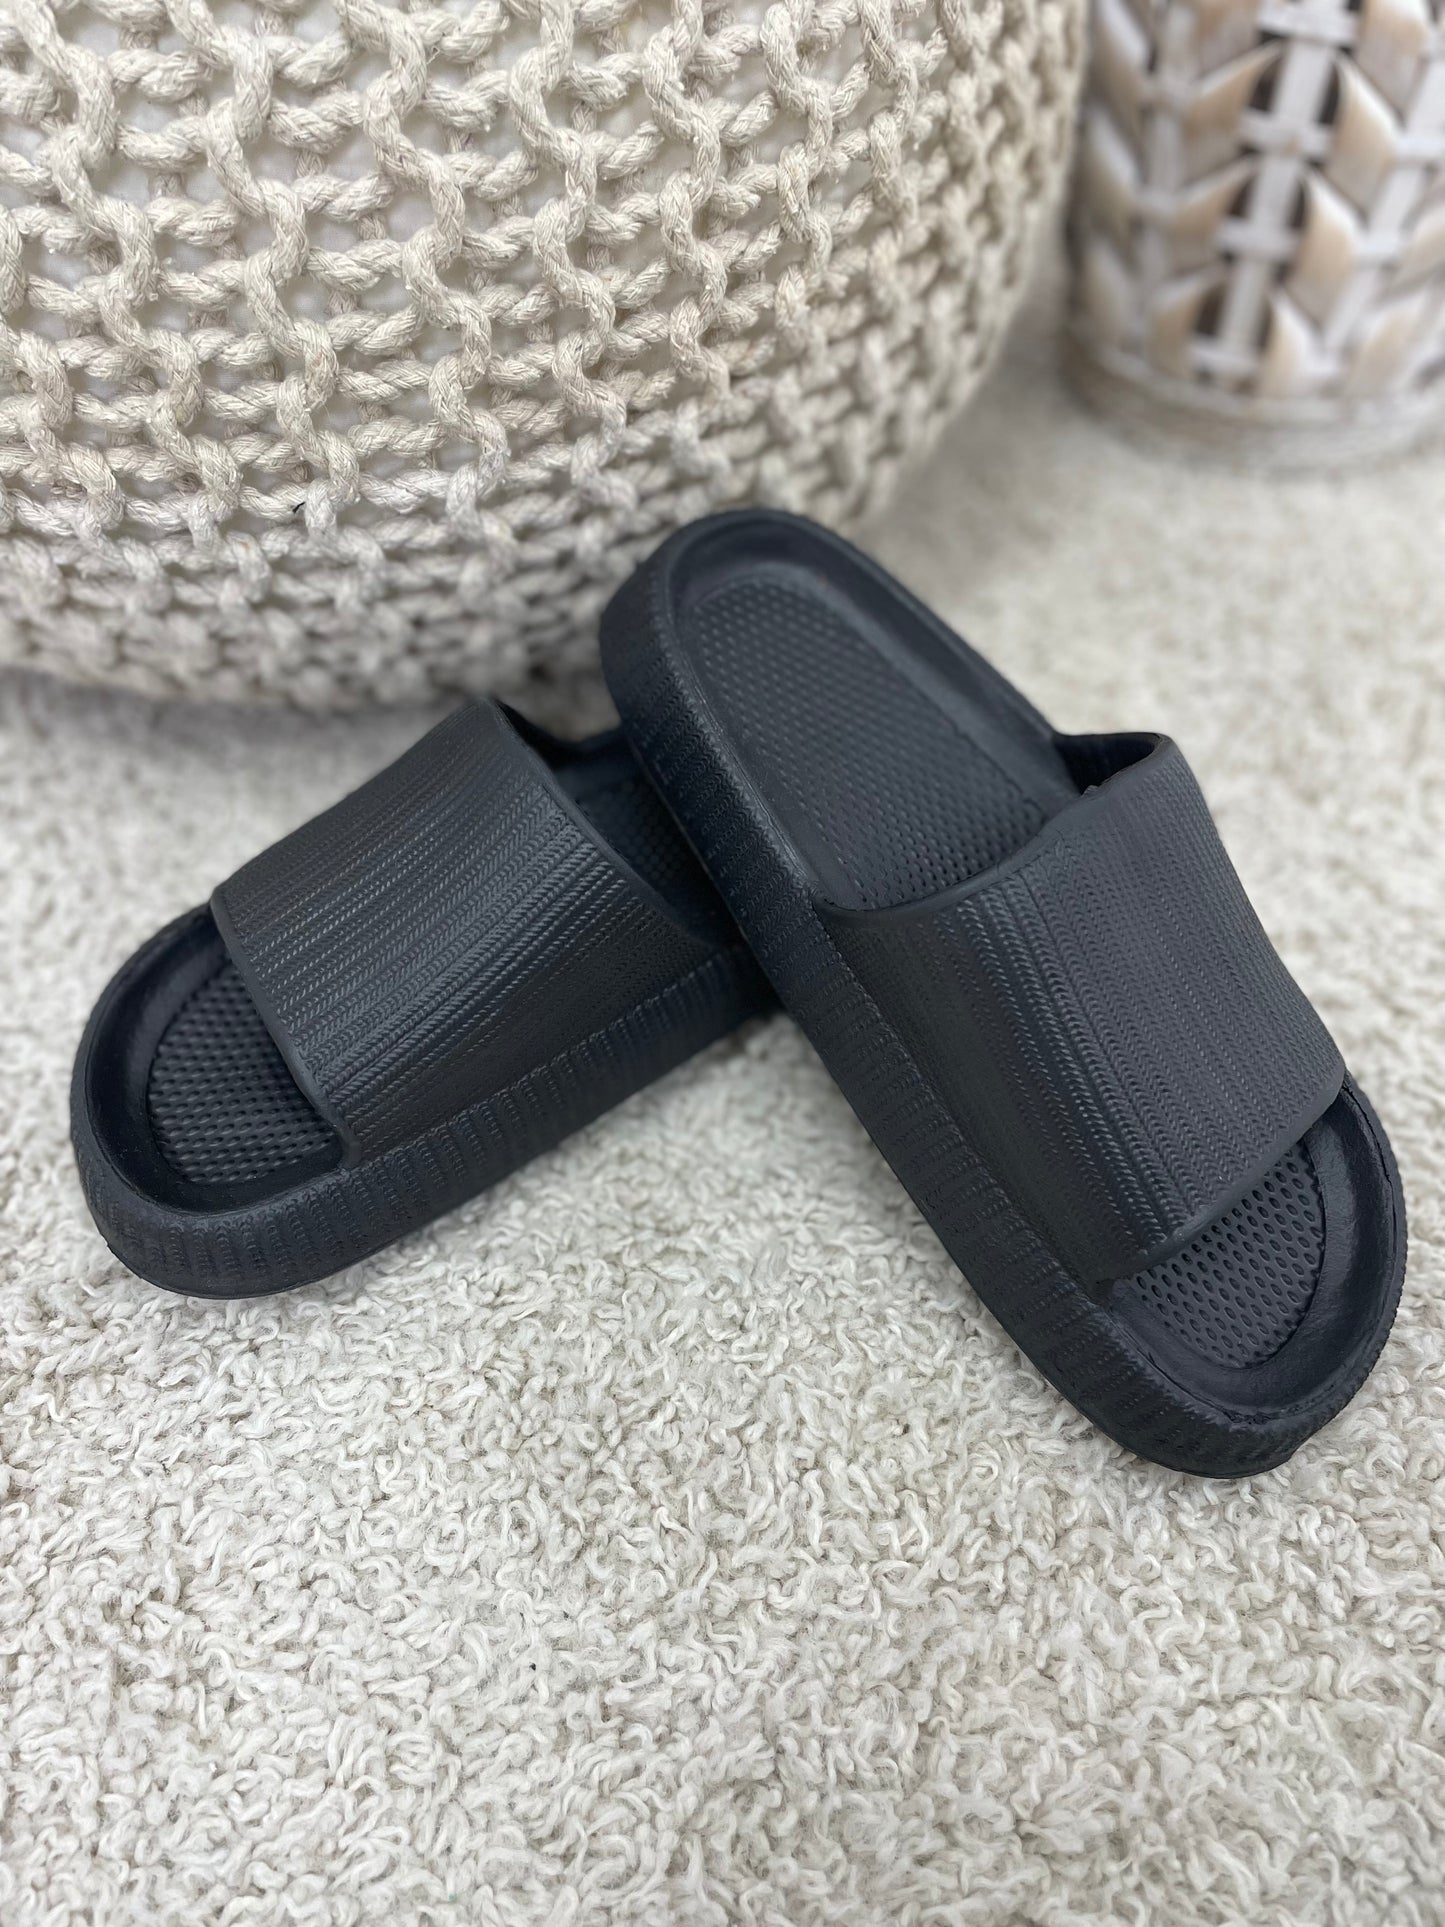 The Comfort Sandals